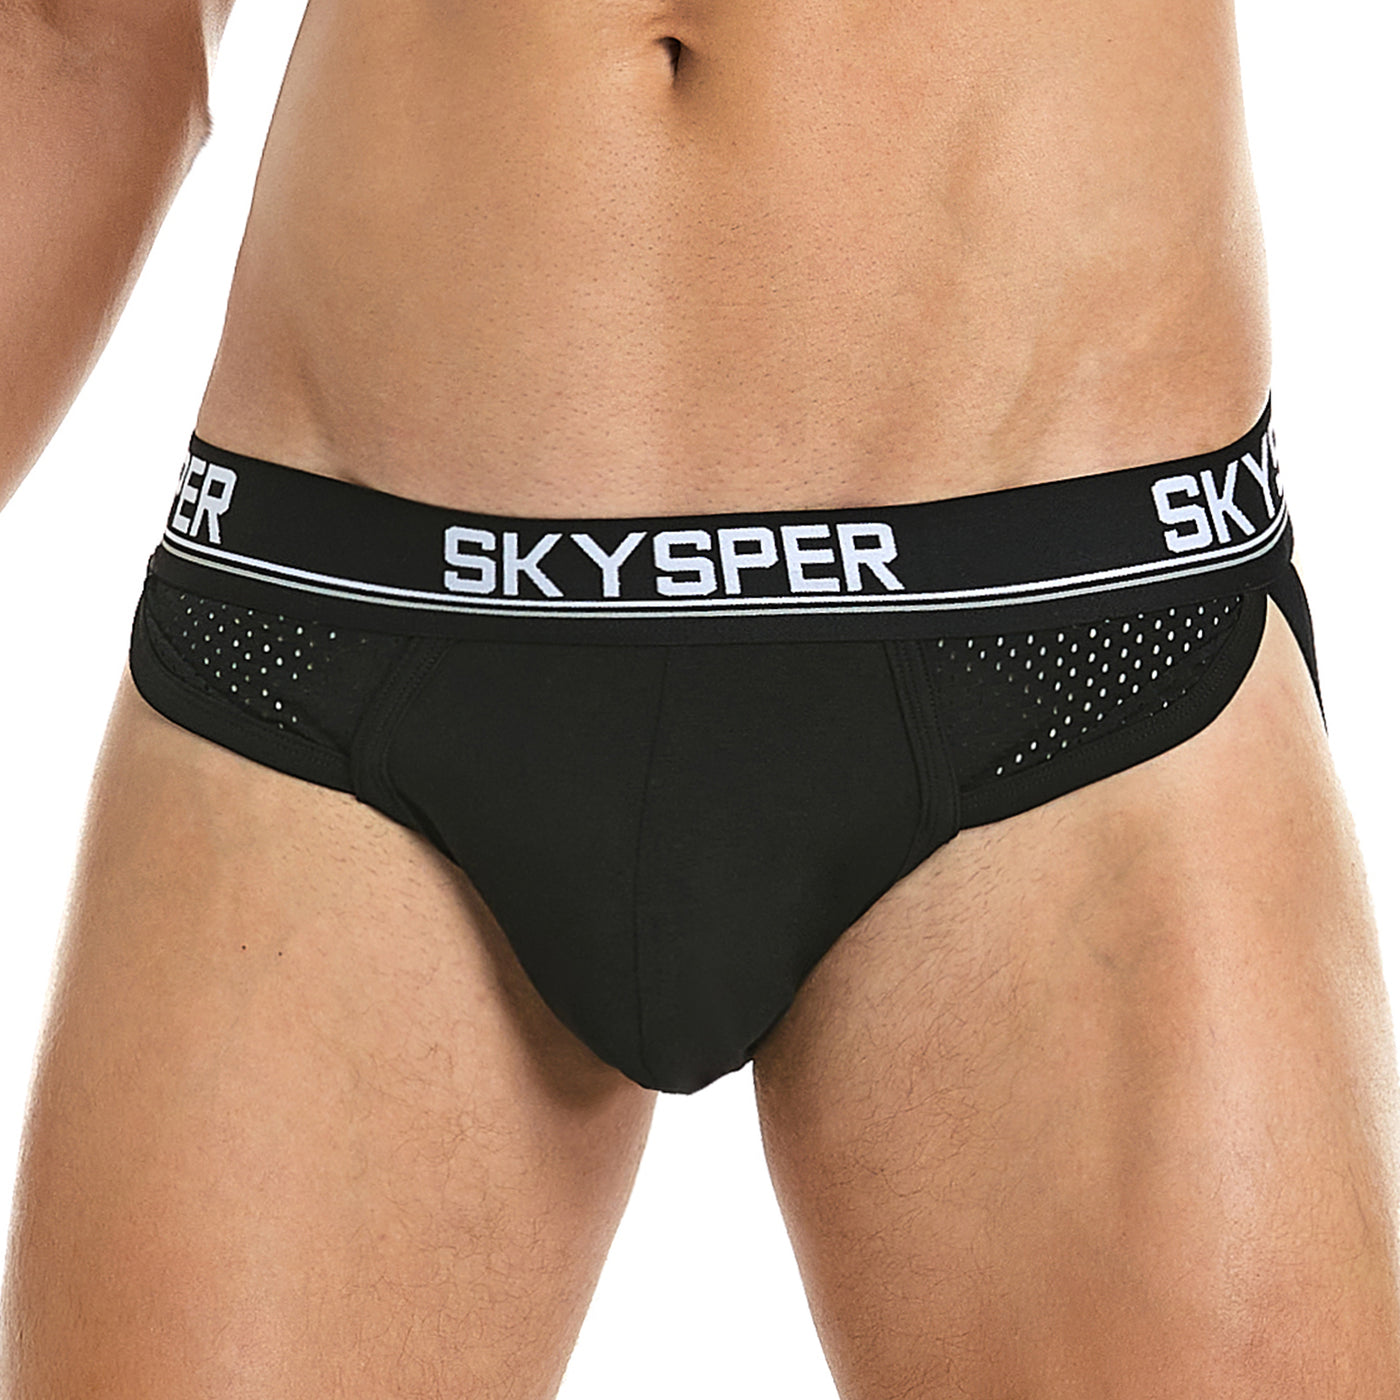 SKYSPER 26SK - Men's Cotton Jockstrap Underwear Athletic Supporter